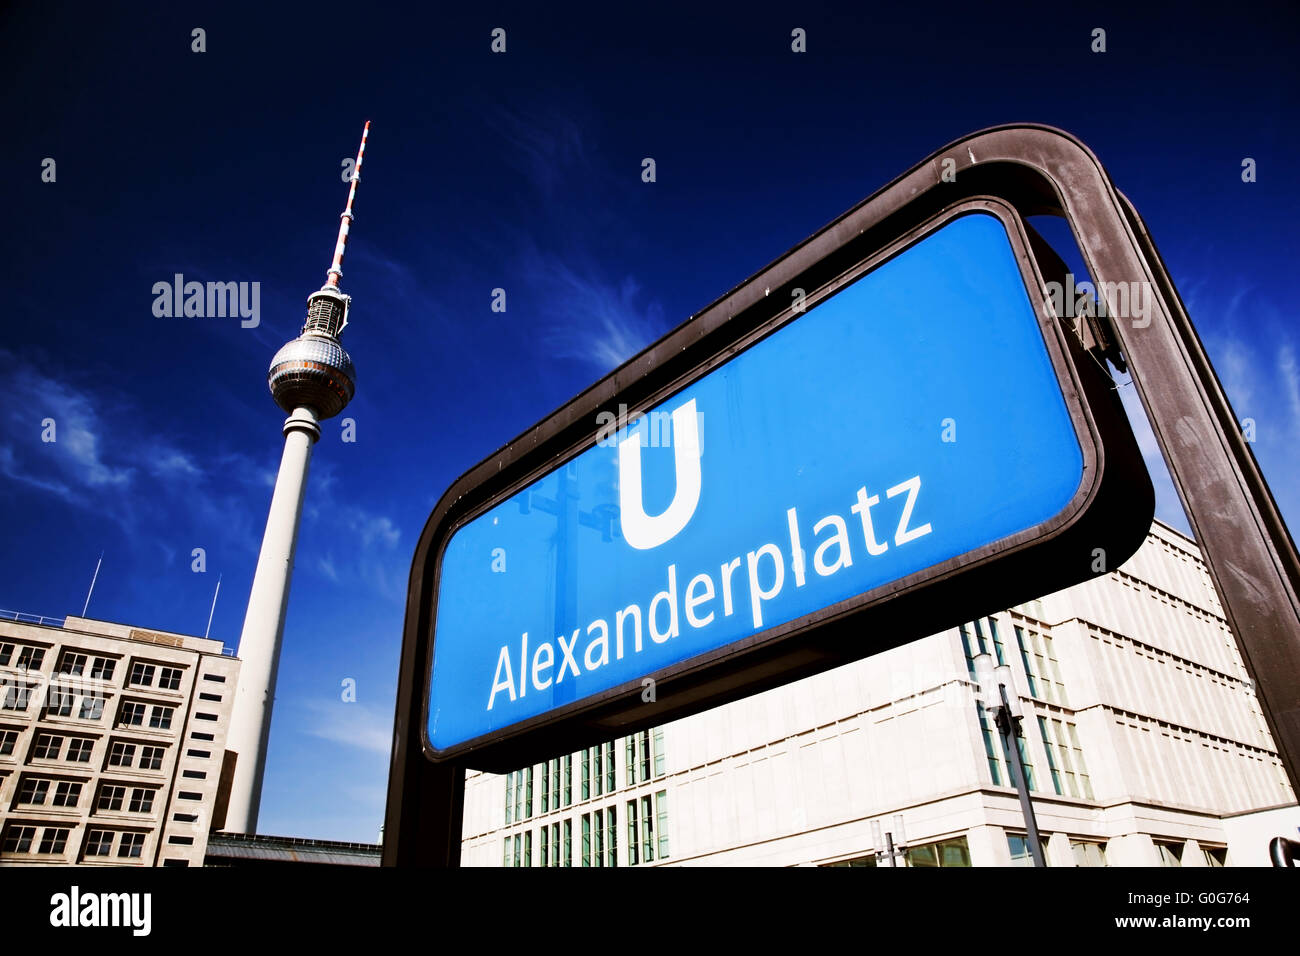 U-bahn Alexanderplatz sign and Television tower Stock Photo